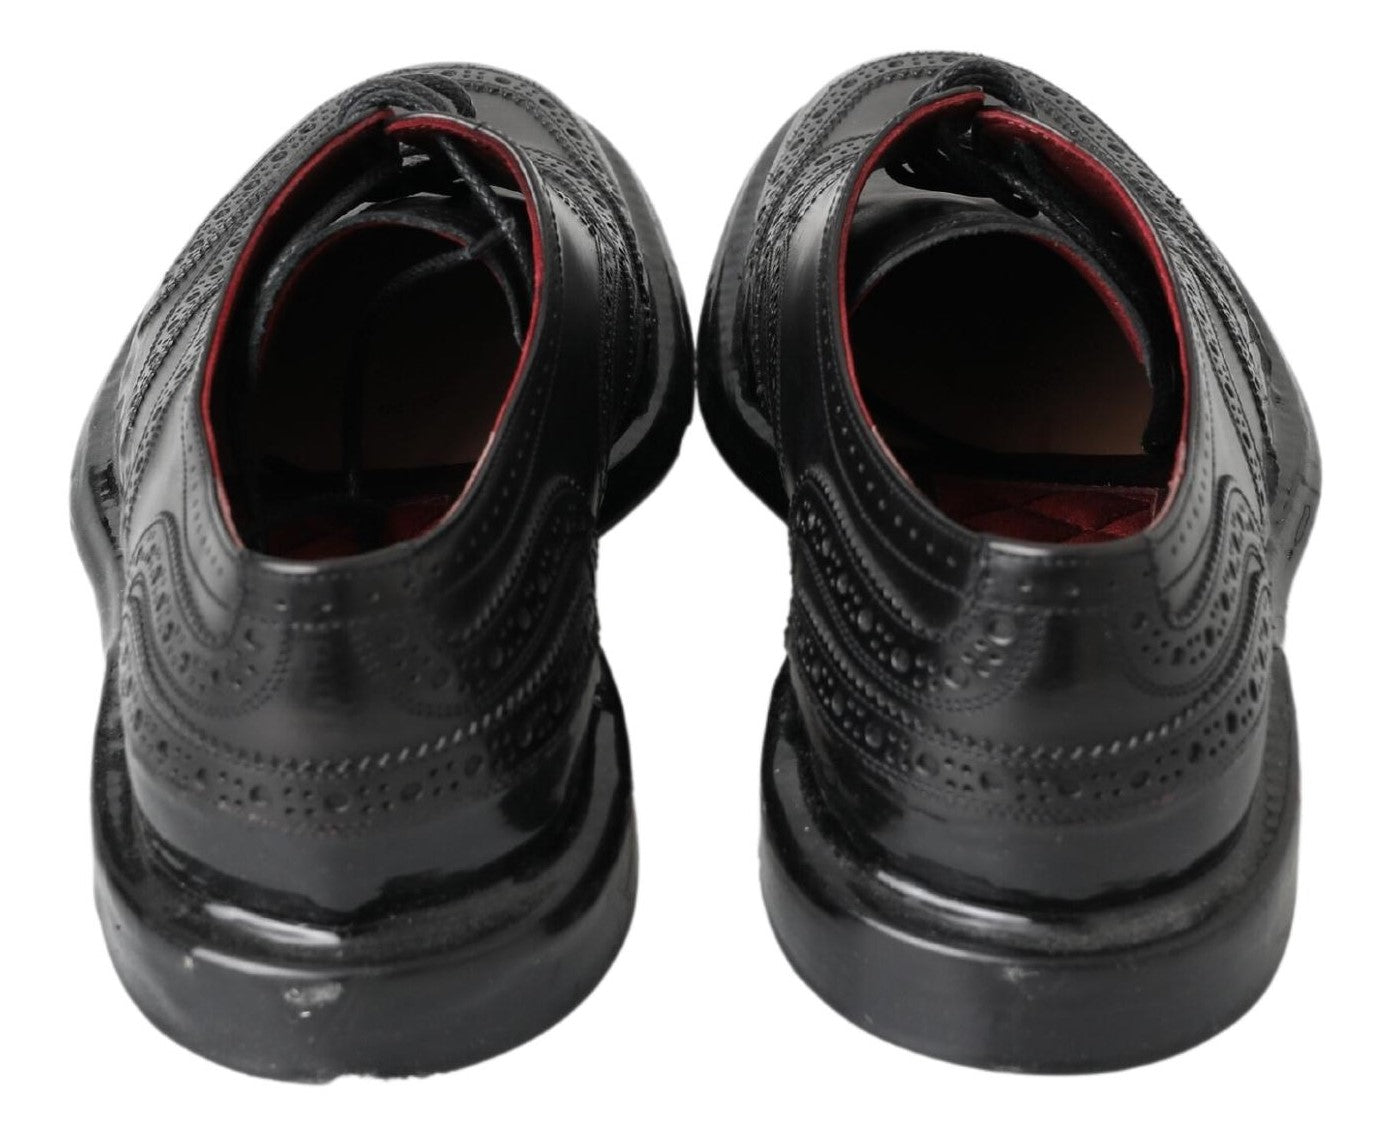 Dolce & gabbana Black Leather Oxford Wingtip Formal Derby Shoes